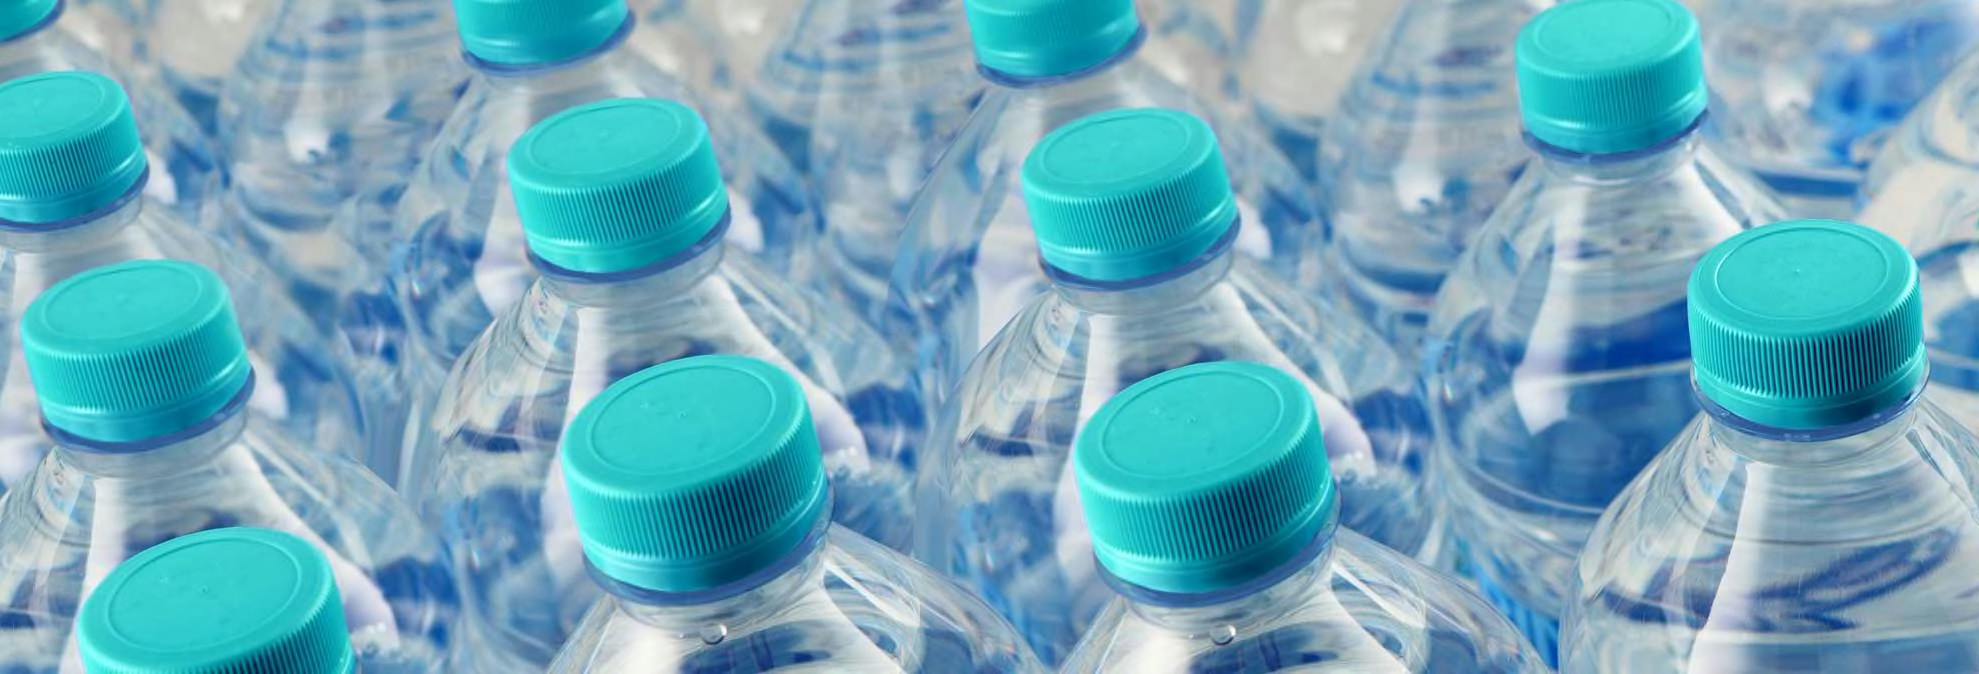 Should We Break Our Bottled Water Habit? - ConsumerReports.org